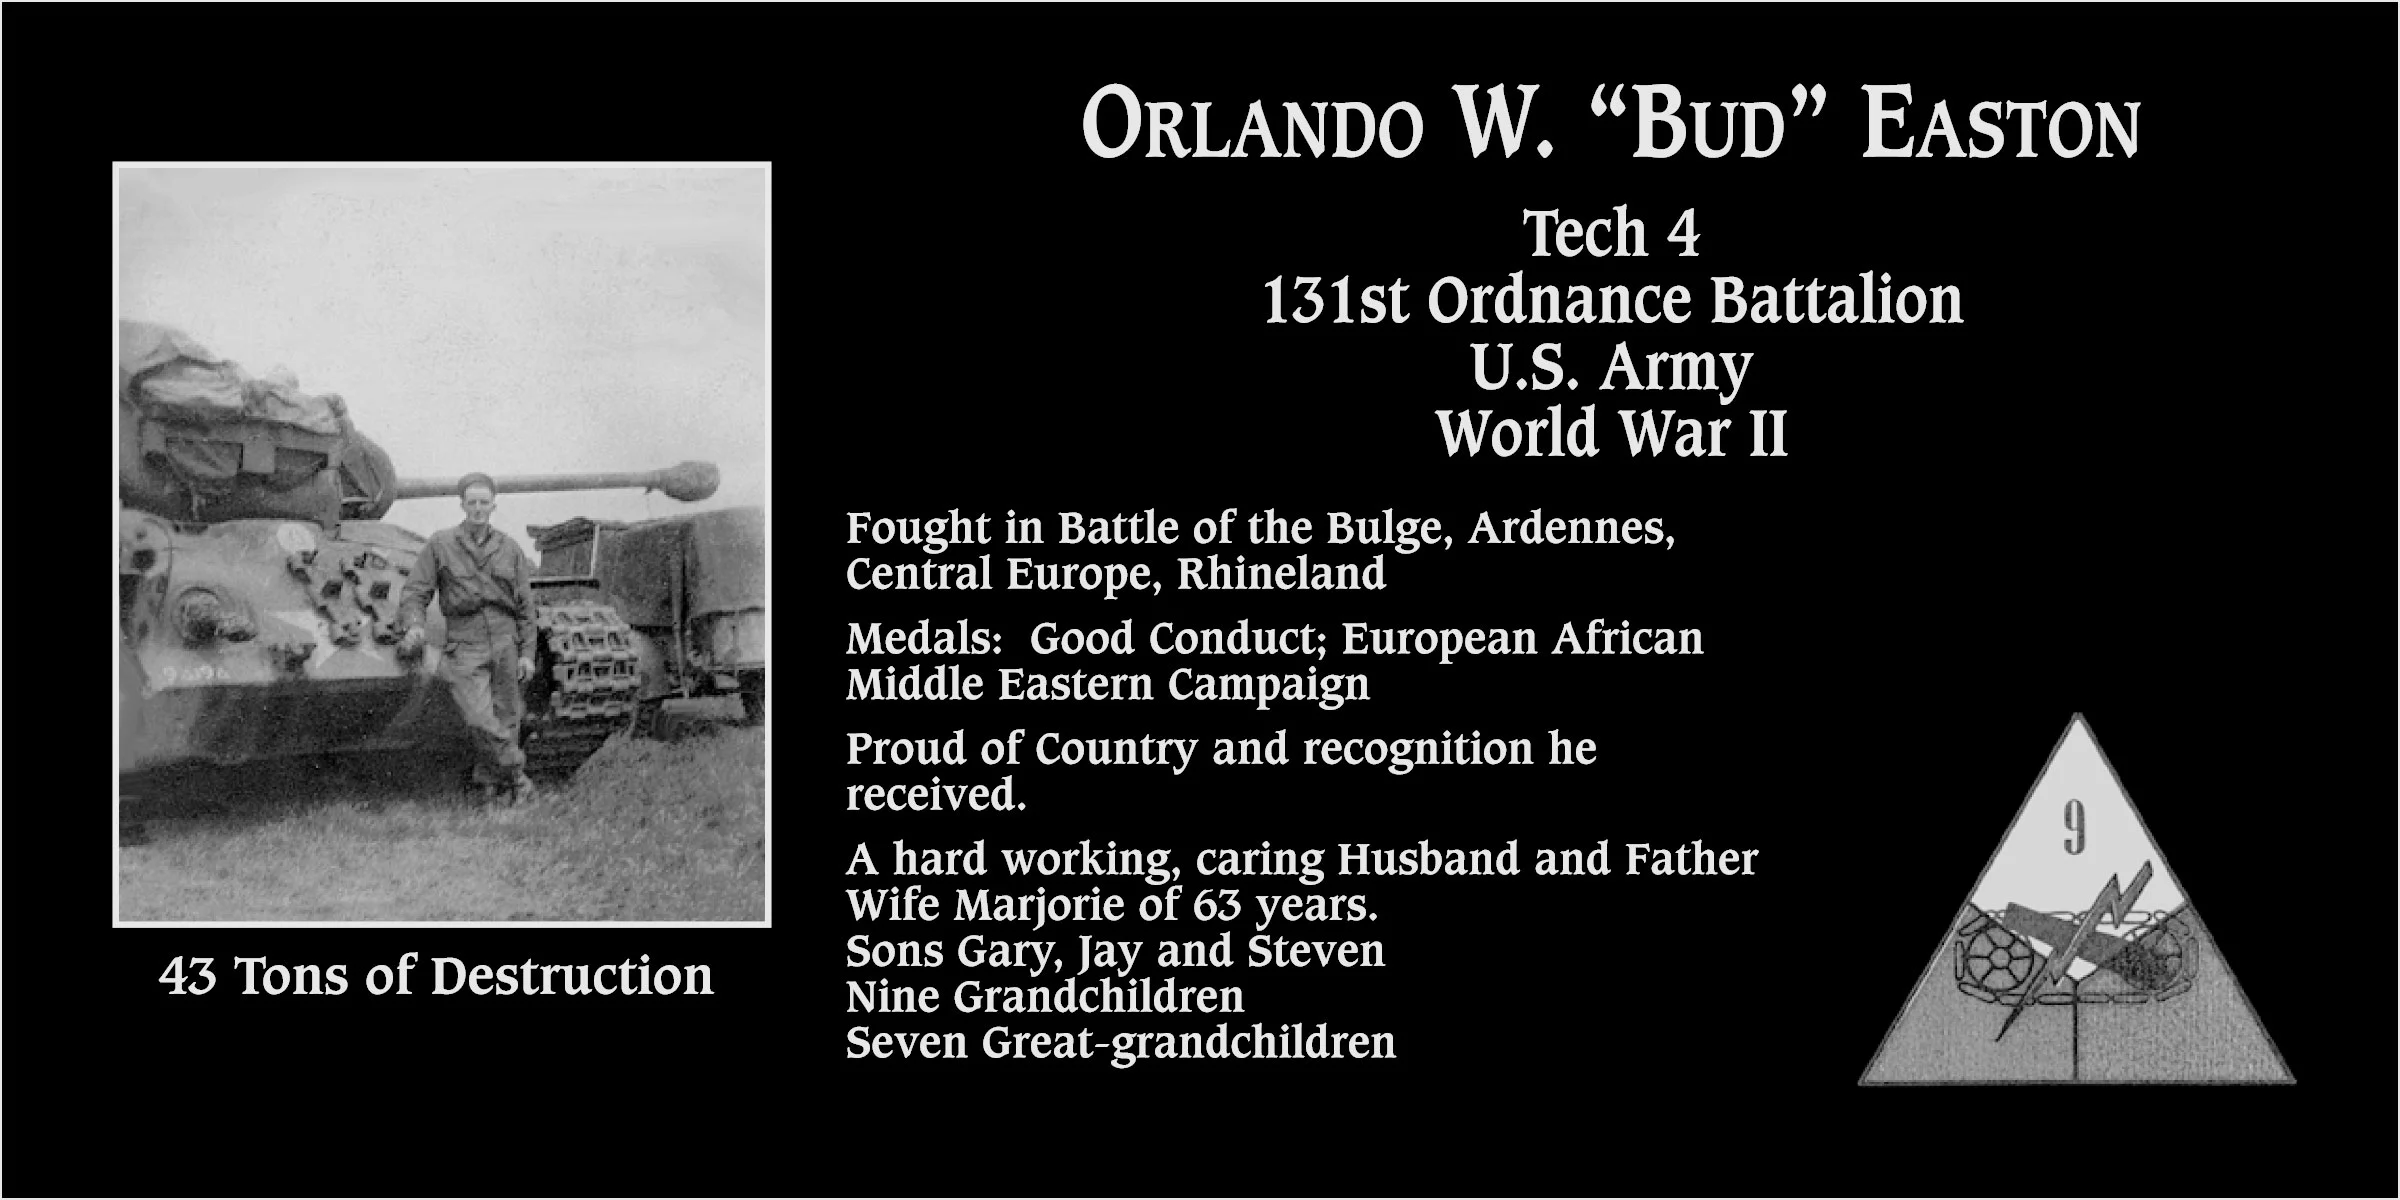 Orlando W “Bud” Easton